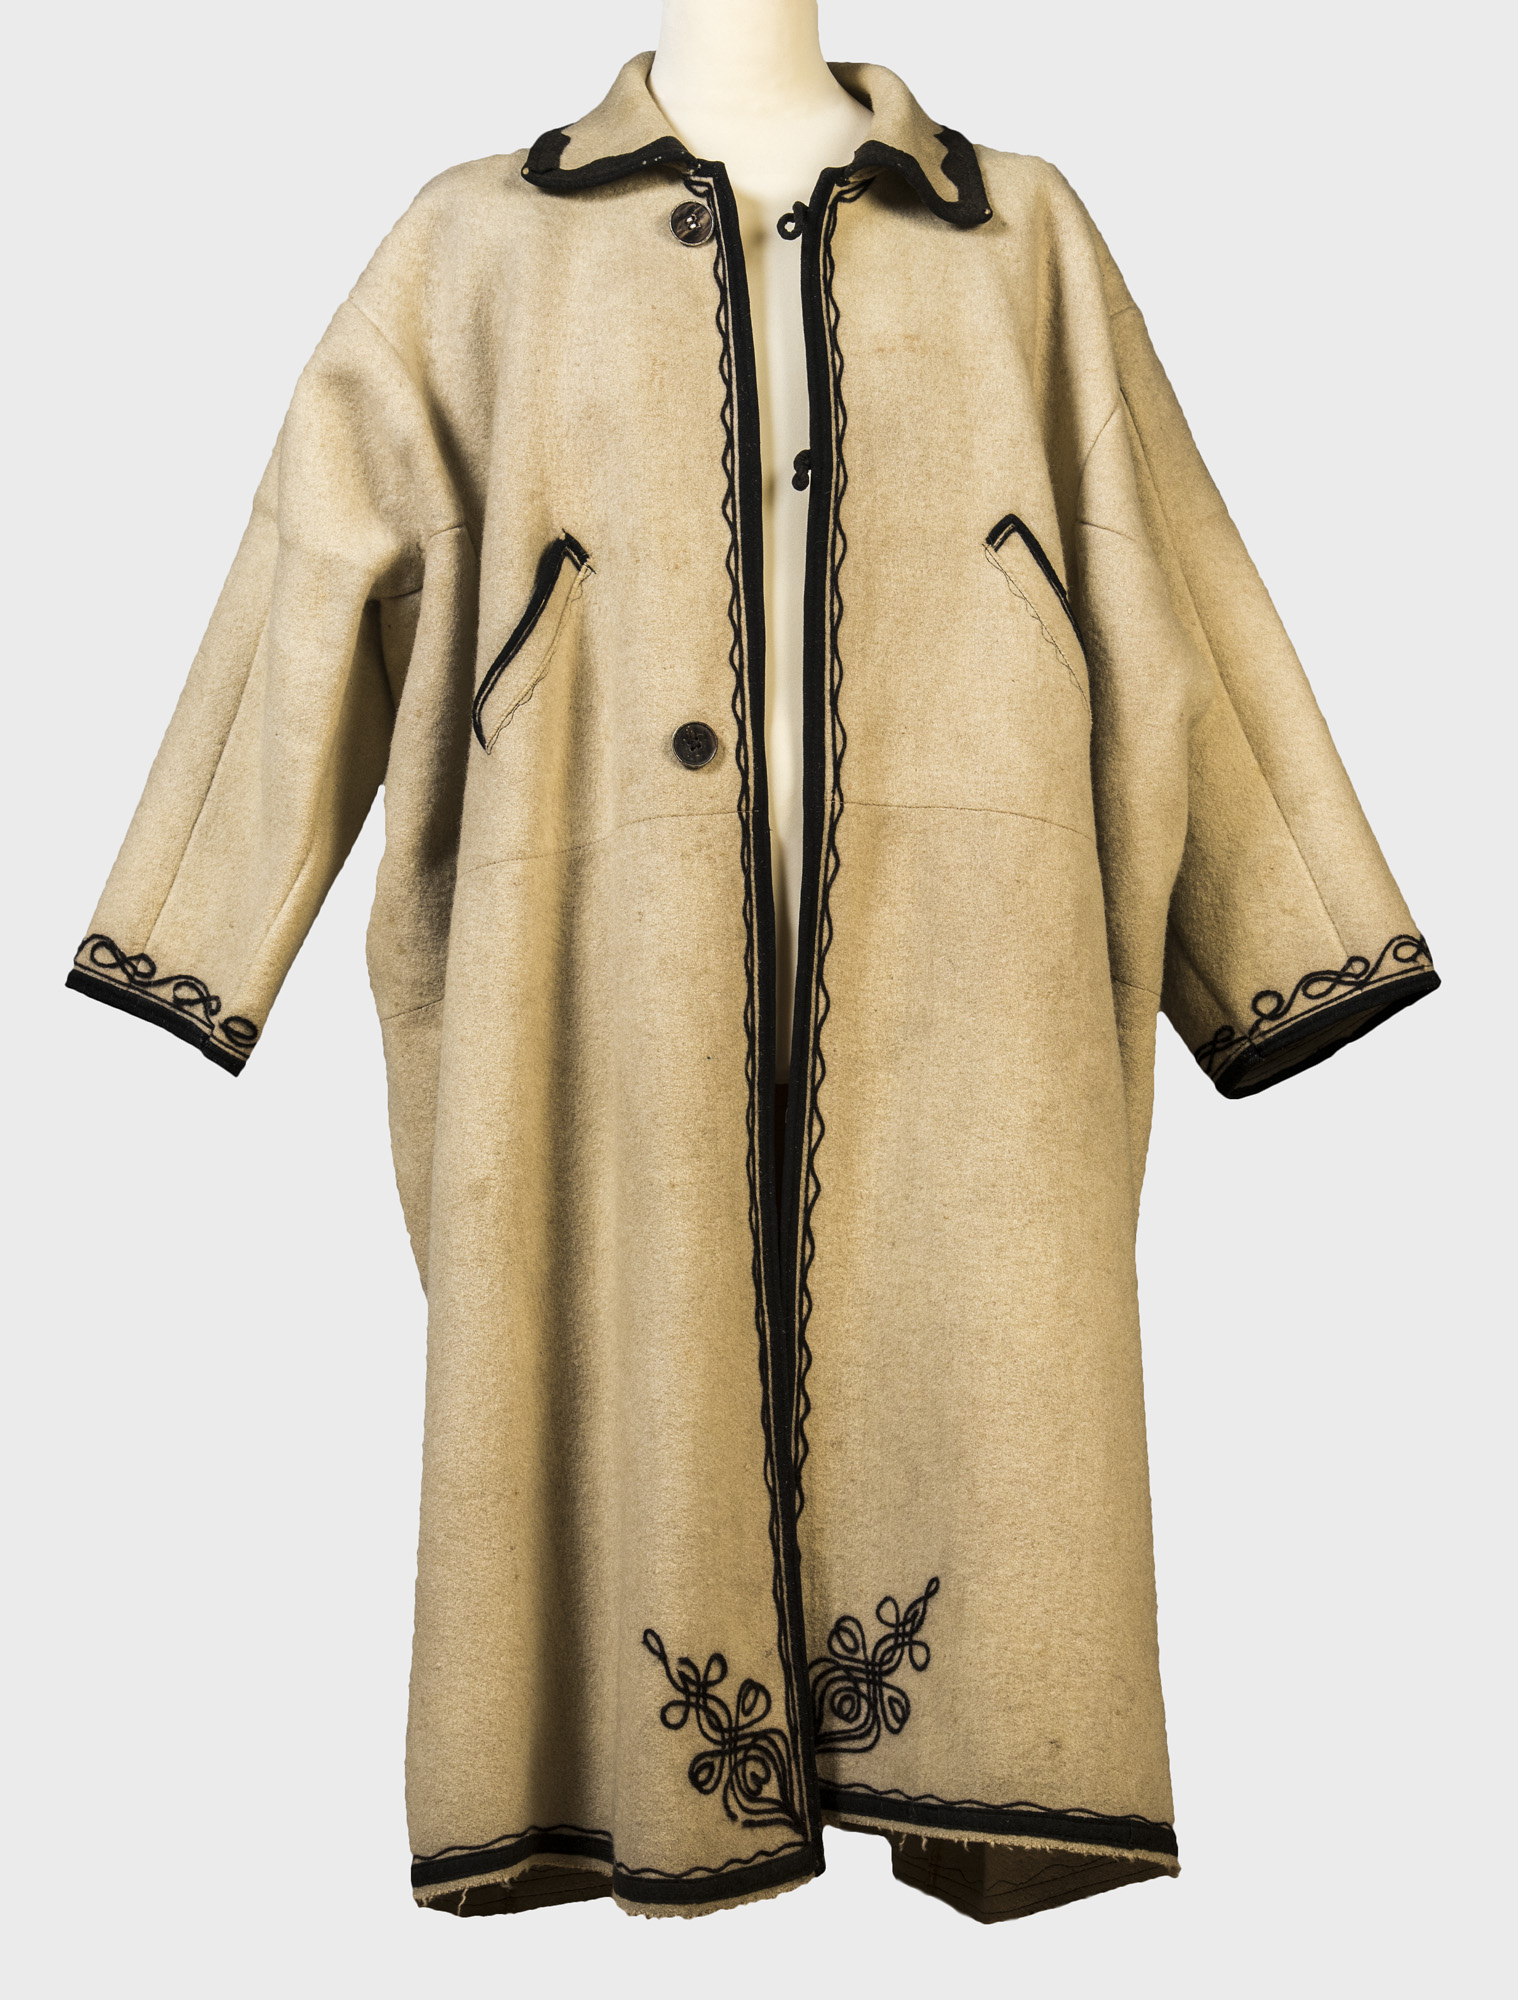 Kabát (Német Nemzetiségi Múzeum, Tata CC BY-NC-SA)